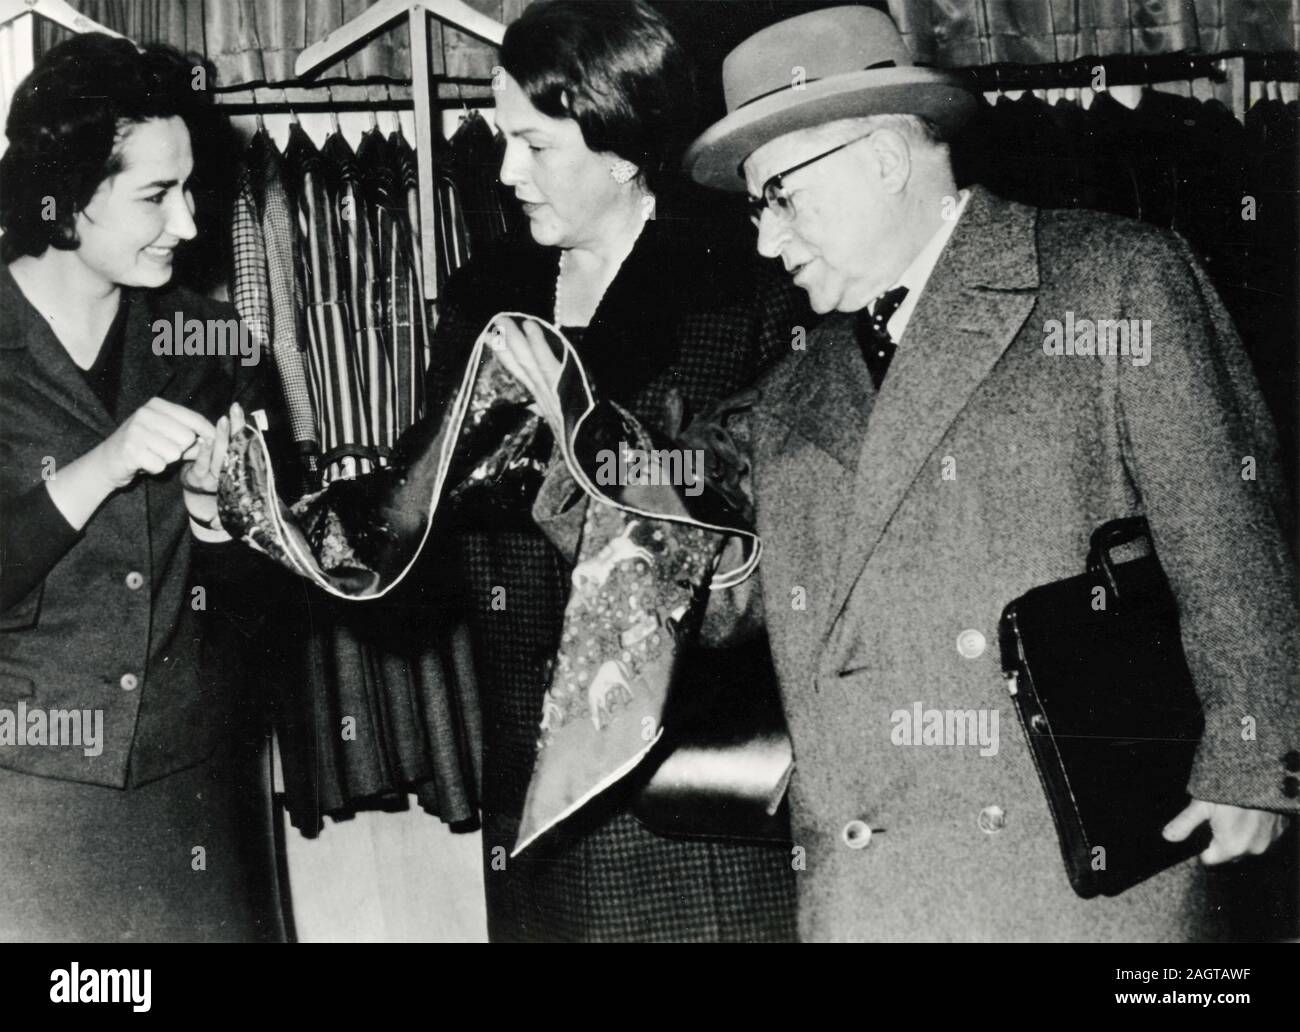 Italienische Politiker Palmiro Togliatti und Nilde Iotti während der Weihnachtseinkäufe, Rom, Italien 1960 Stockfoto